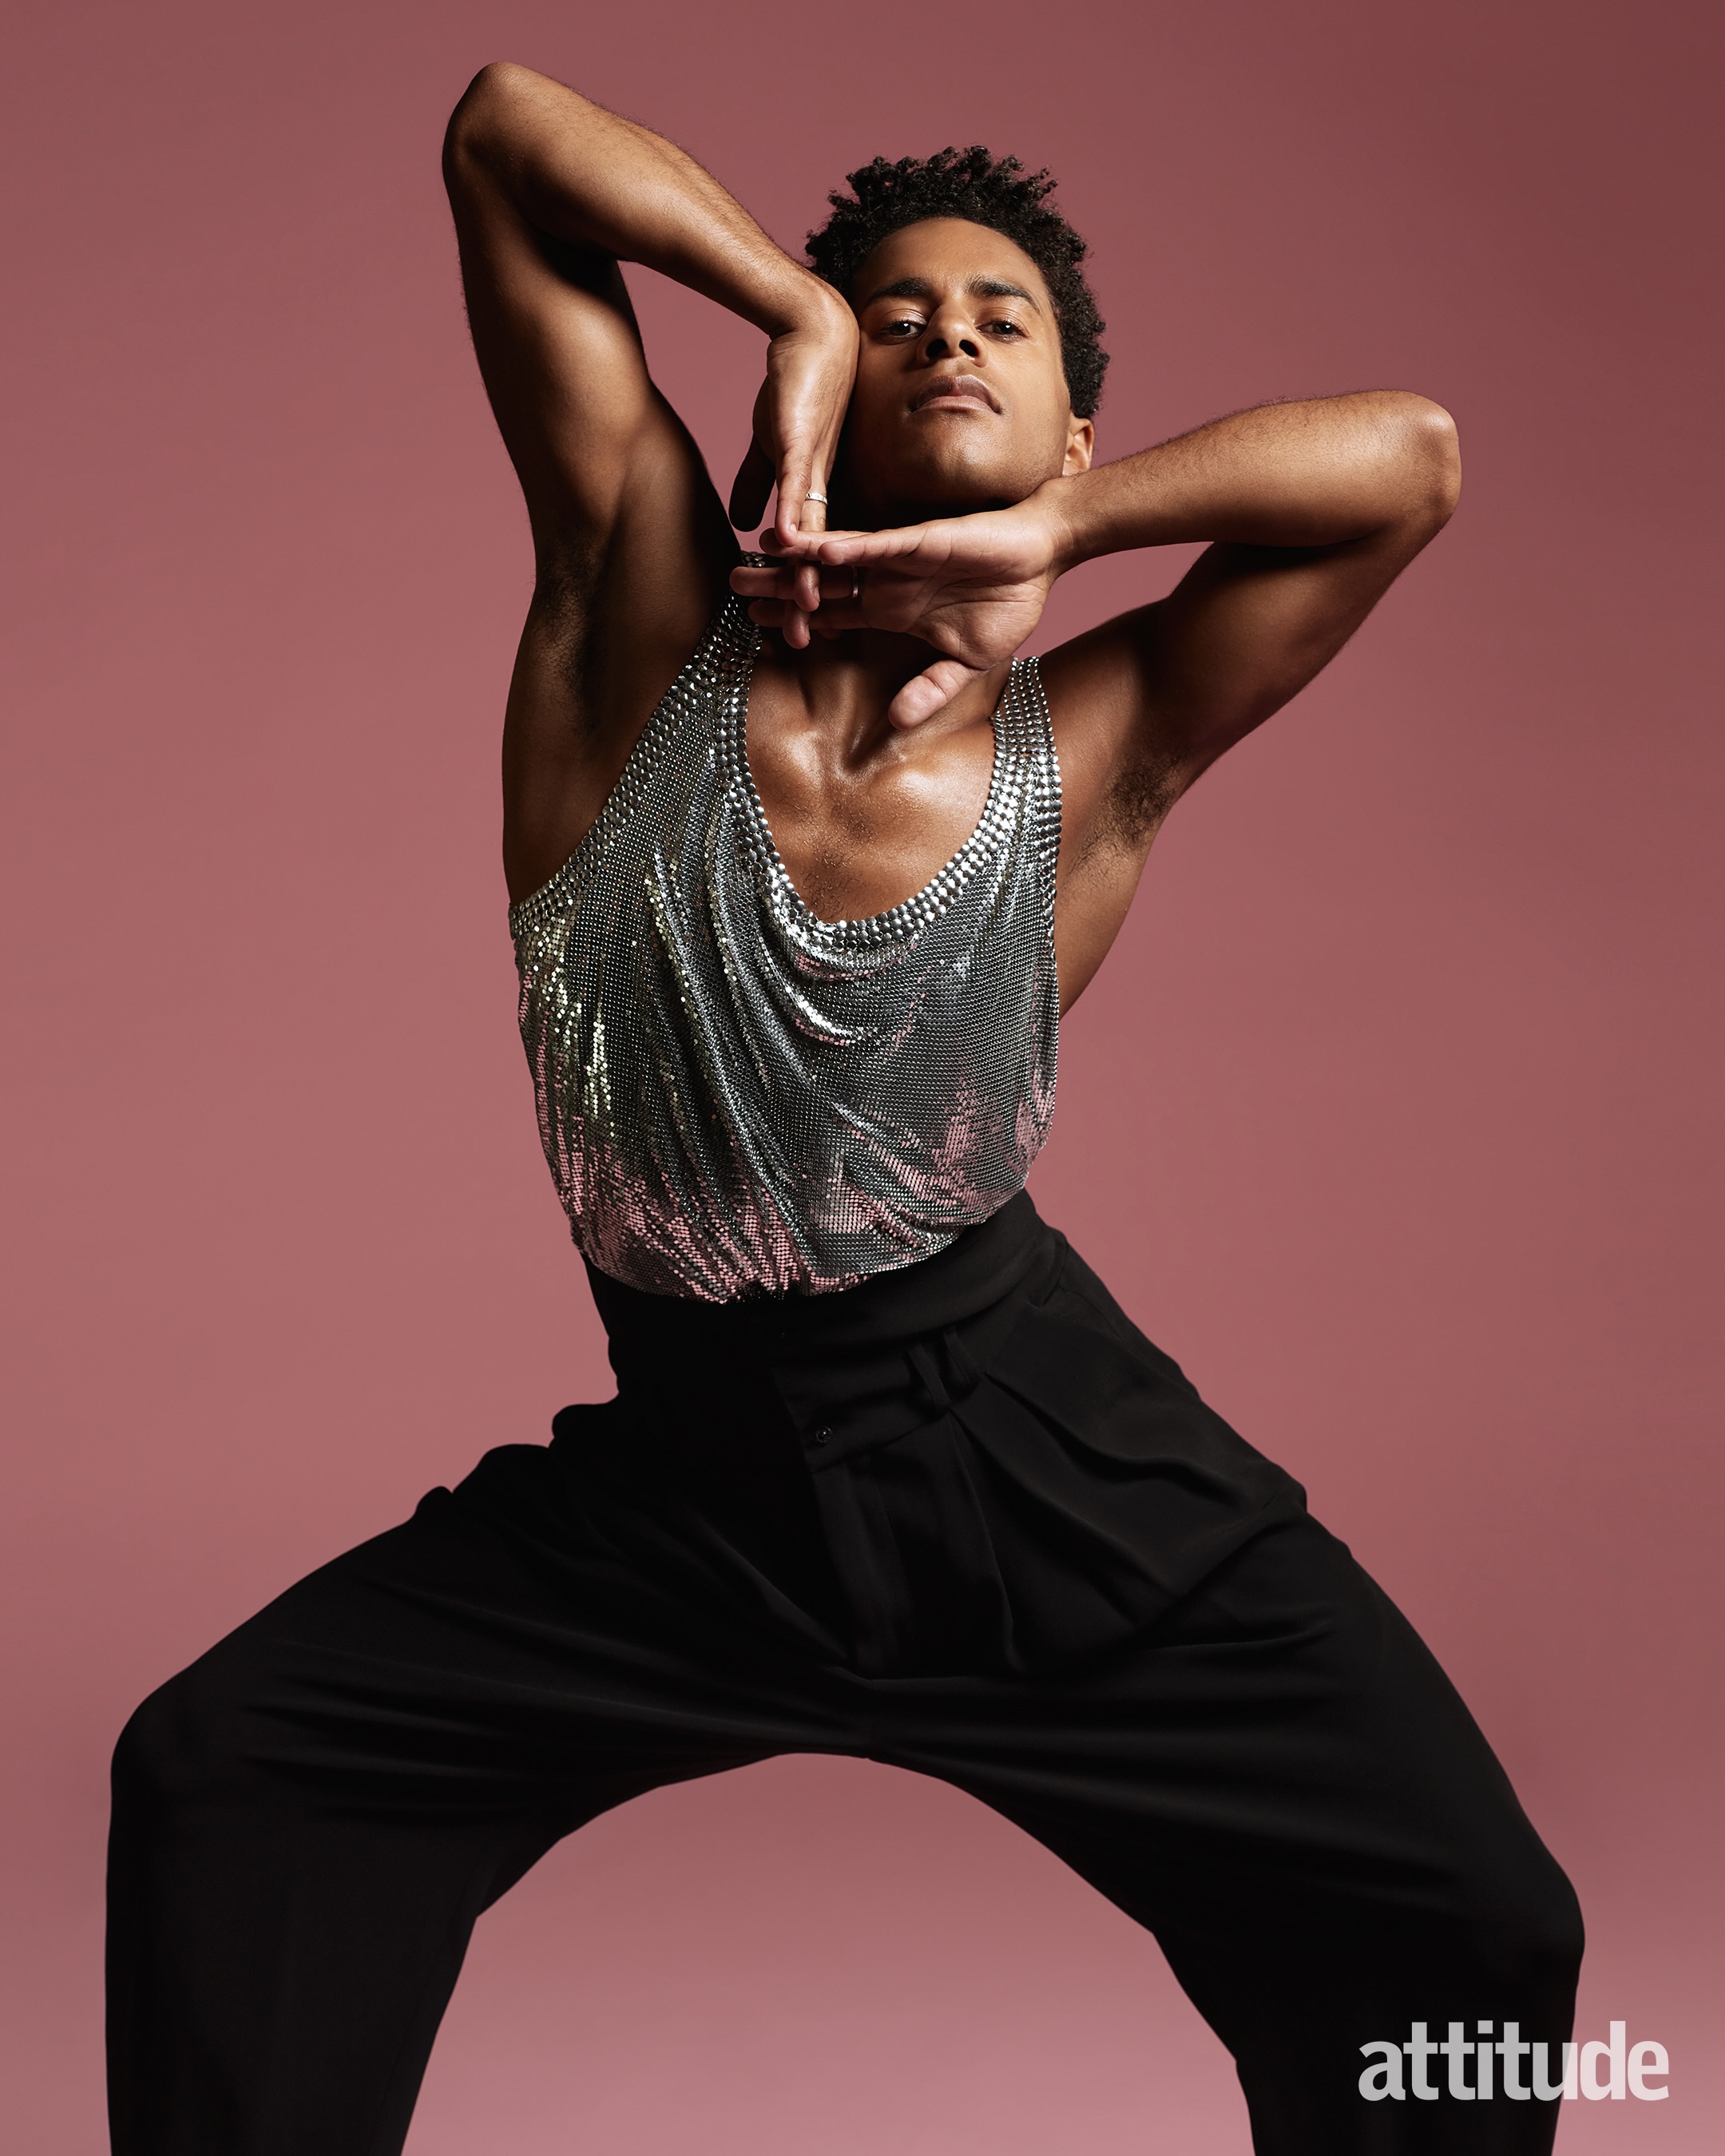 The Royal Ballet's Marcelino Sambé on reaching queer Black audiences as ...